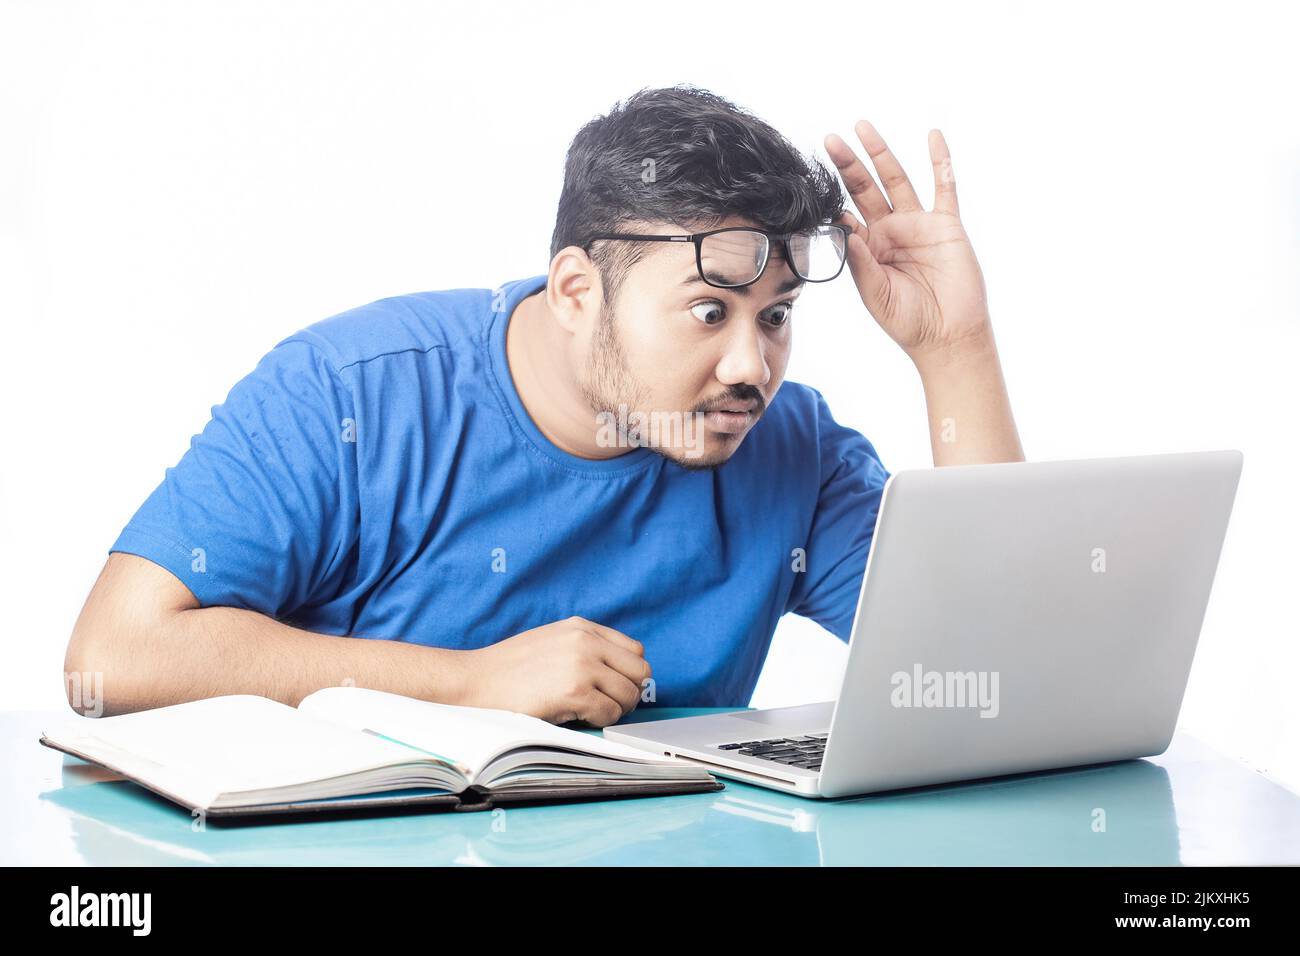 shocked man looking at laptop screen by taking off eyeglass Stock Photo